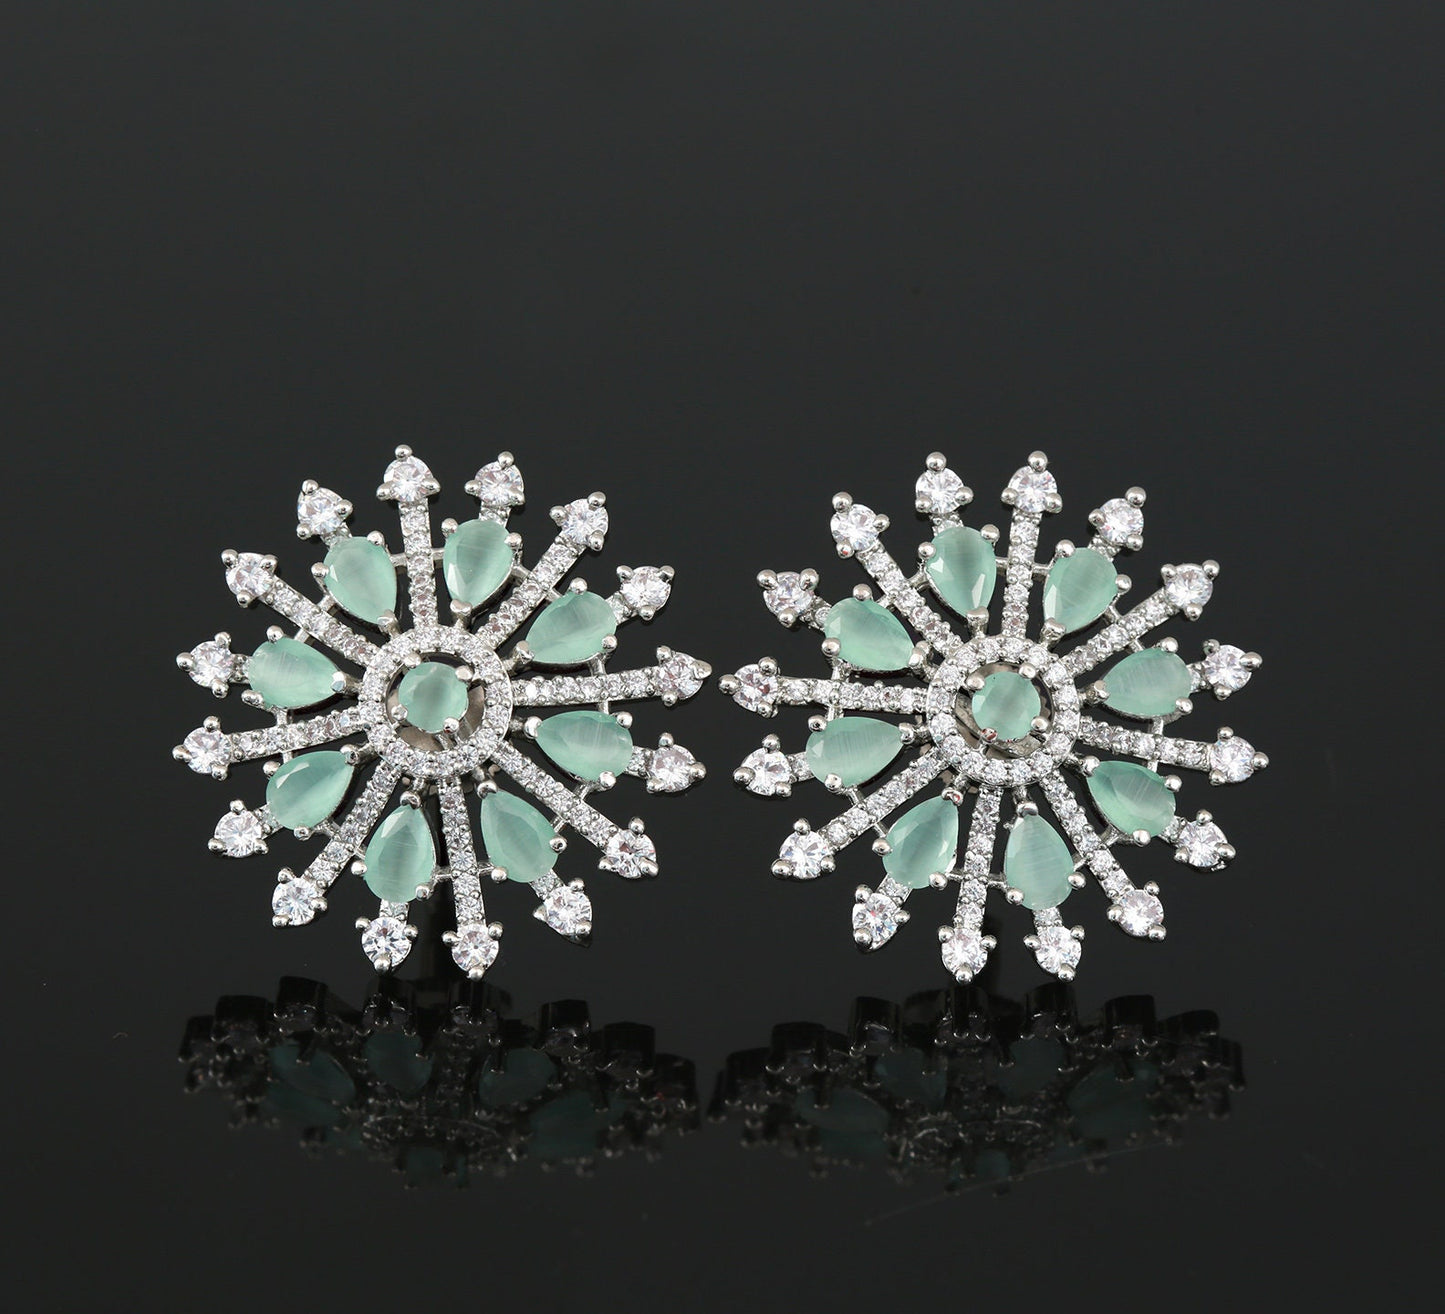 American diamond stud earrings | stud earrings for women | earrings tops | Sky blue rhodium plated Crystal stud earrings | Indian earrings